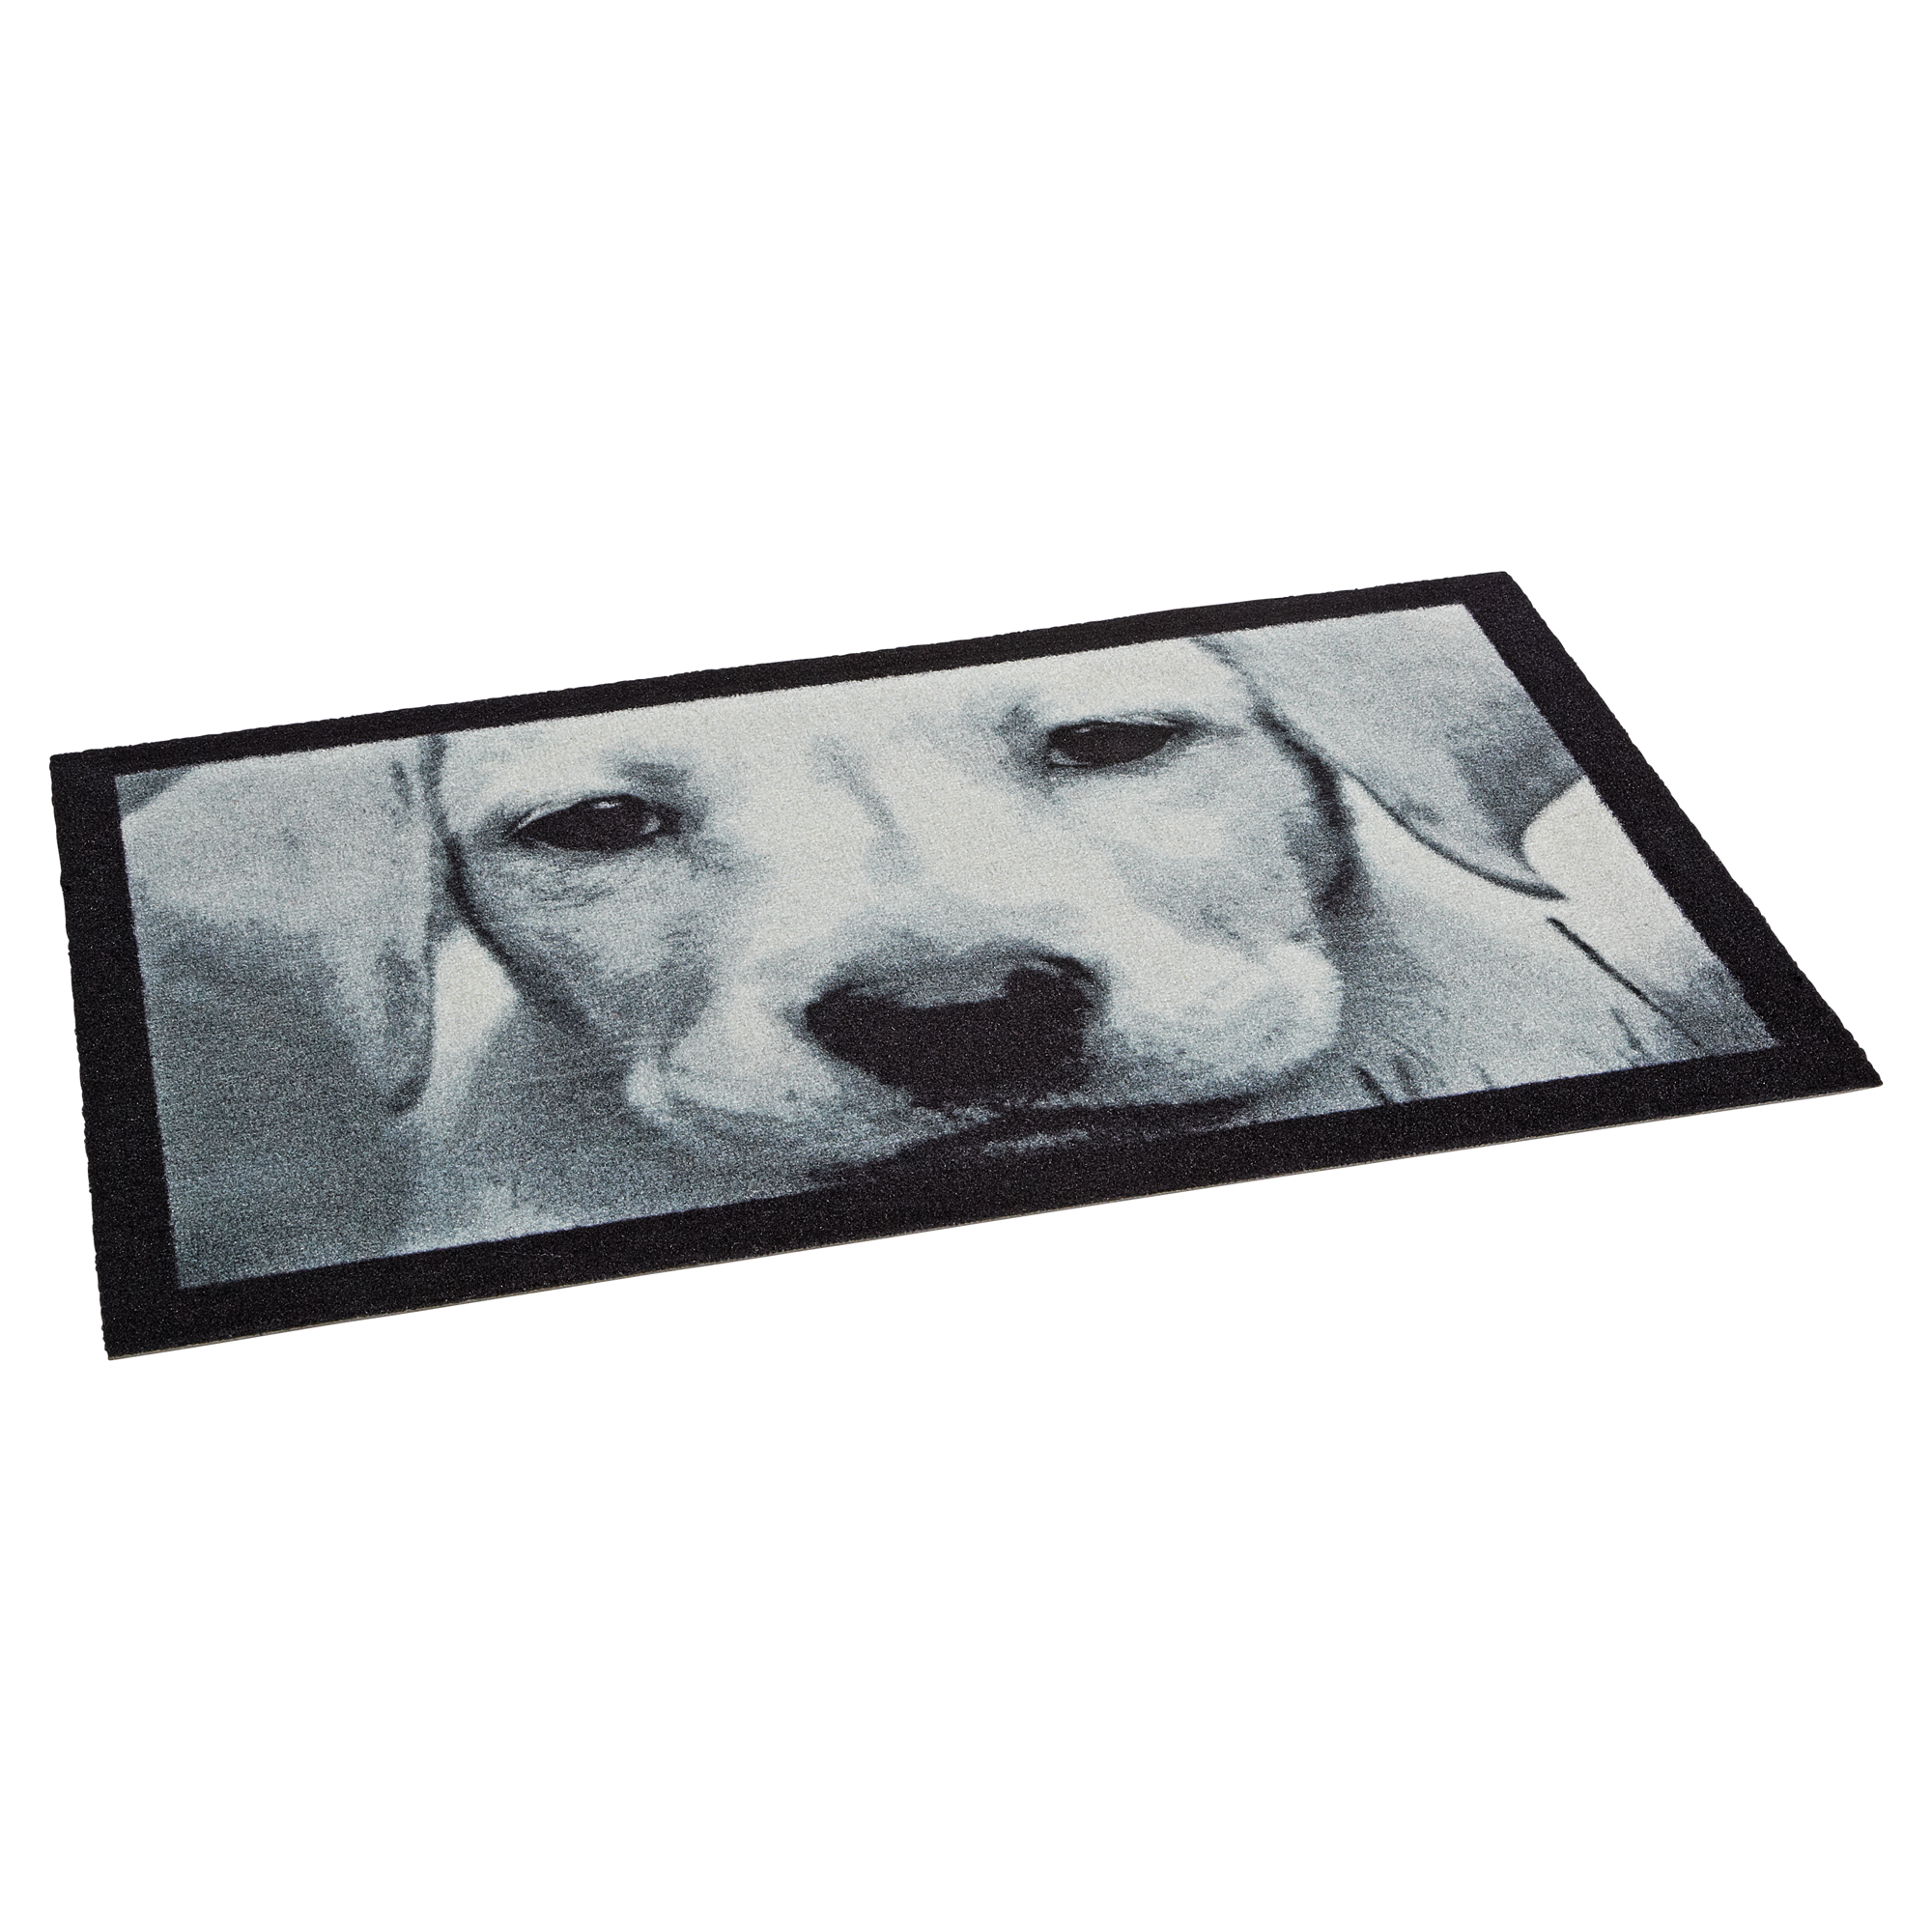 Sauberlaufmatte 'Hund' 58 x 39 cm Hund + product picture